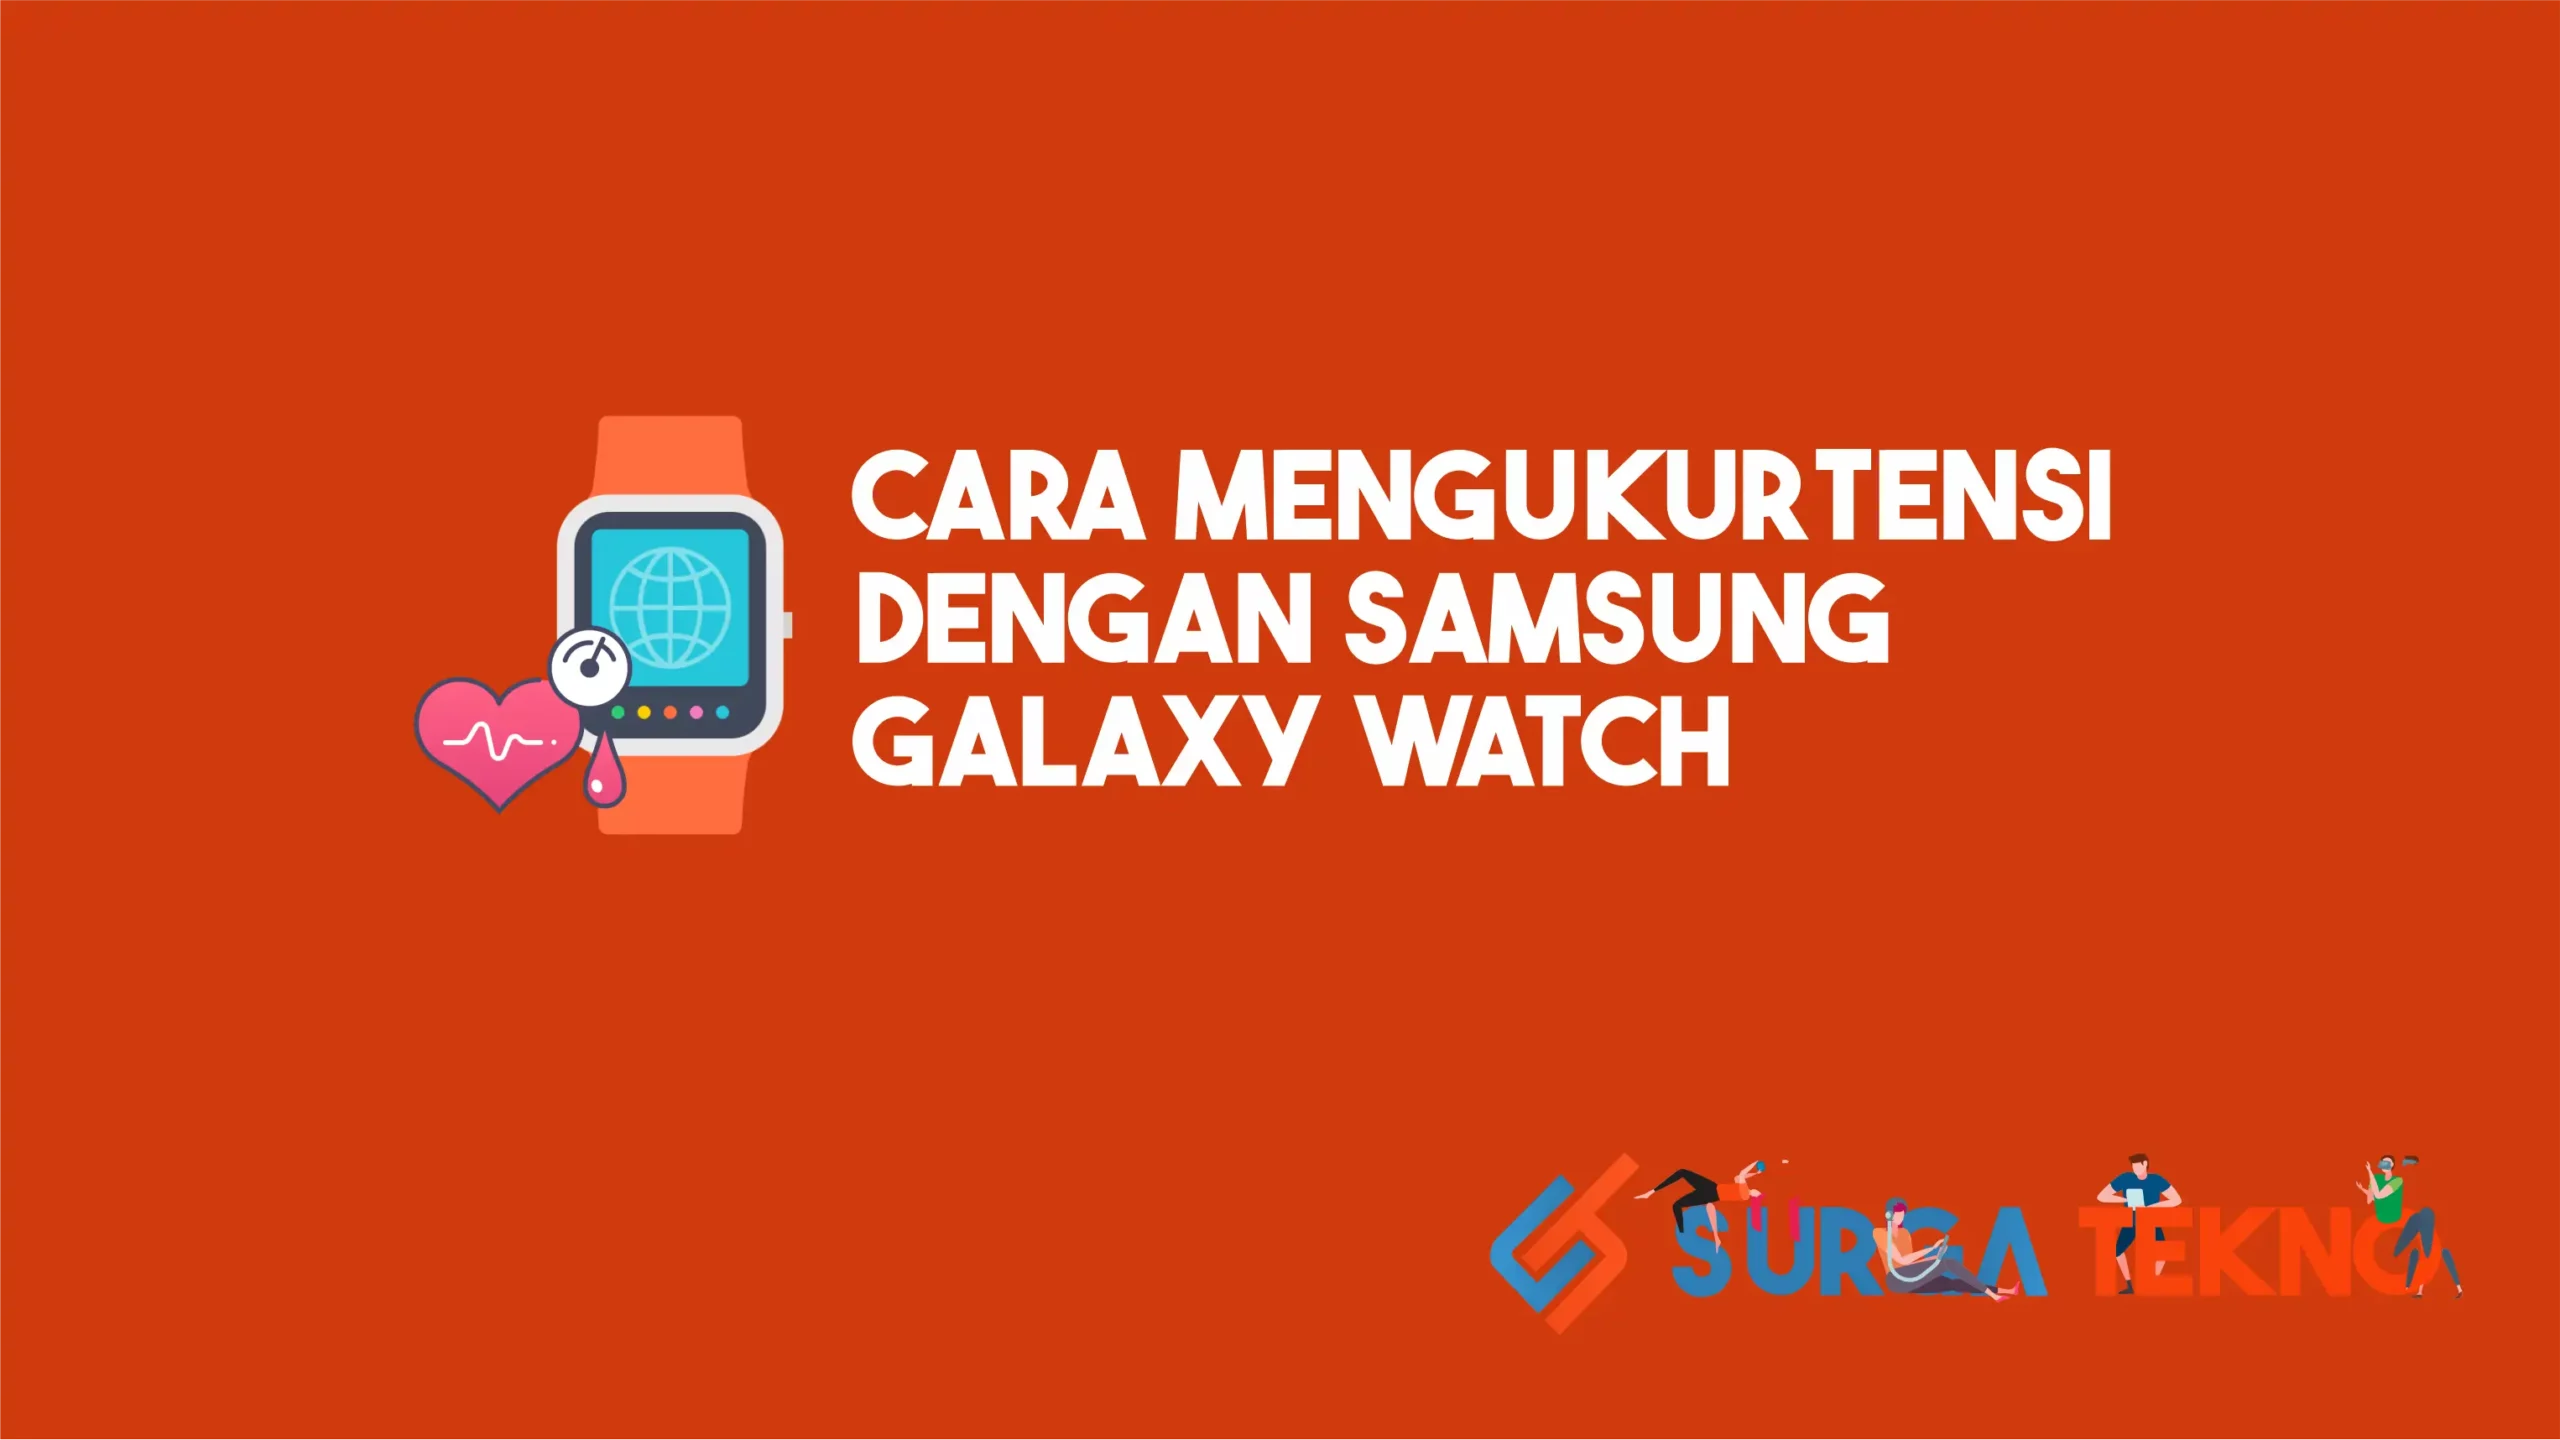 Cara Mengukur Tensi dengan Samsung Galaxy Watch